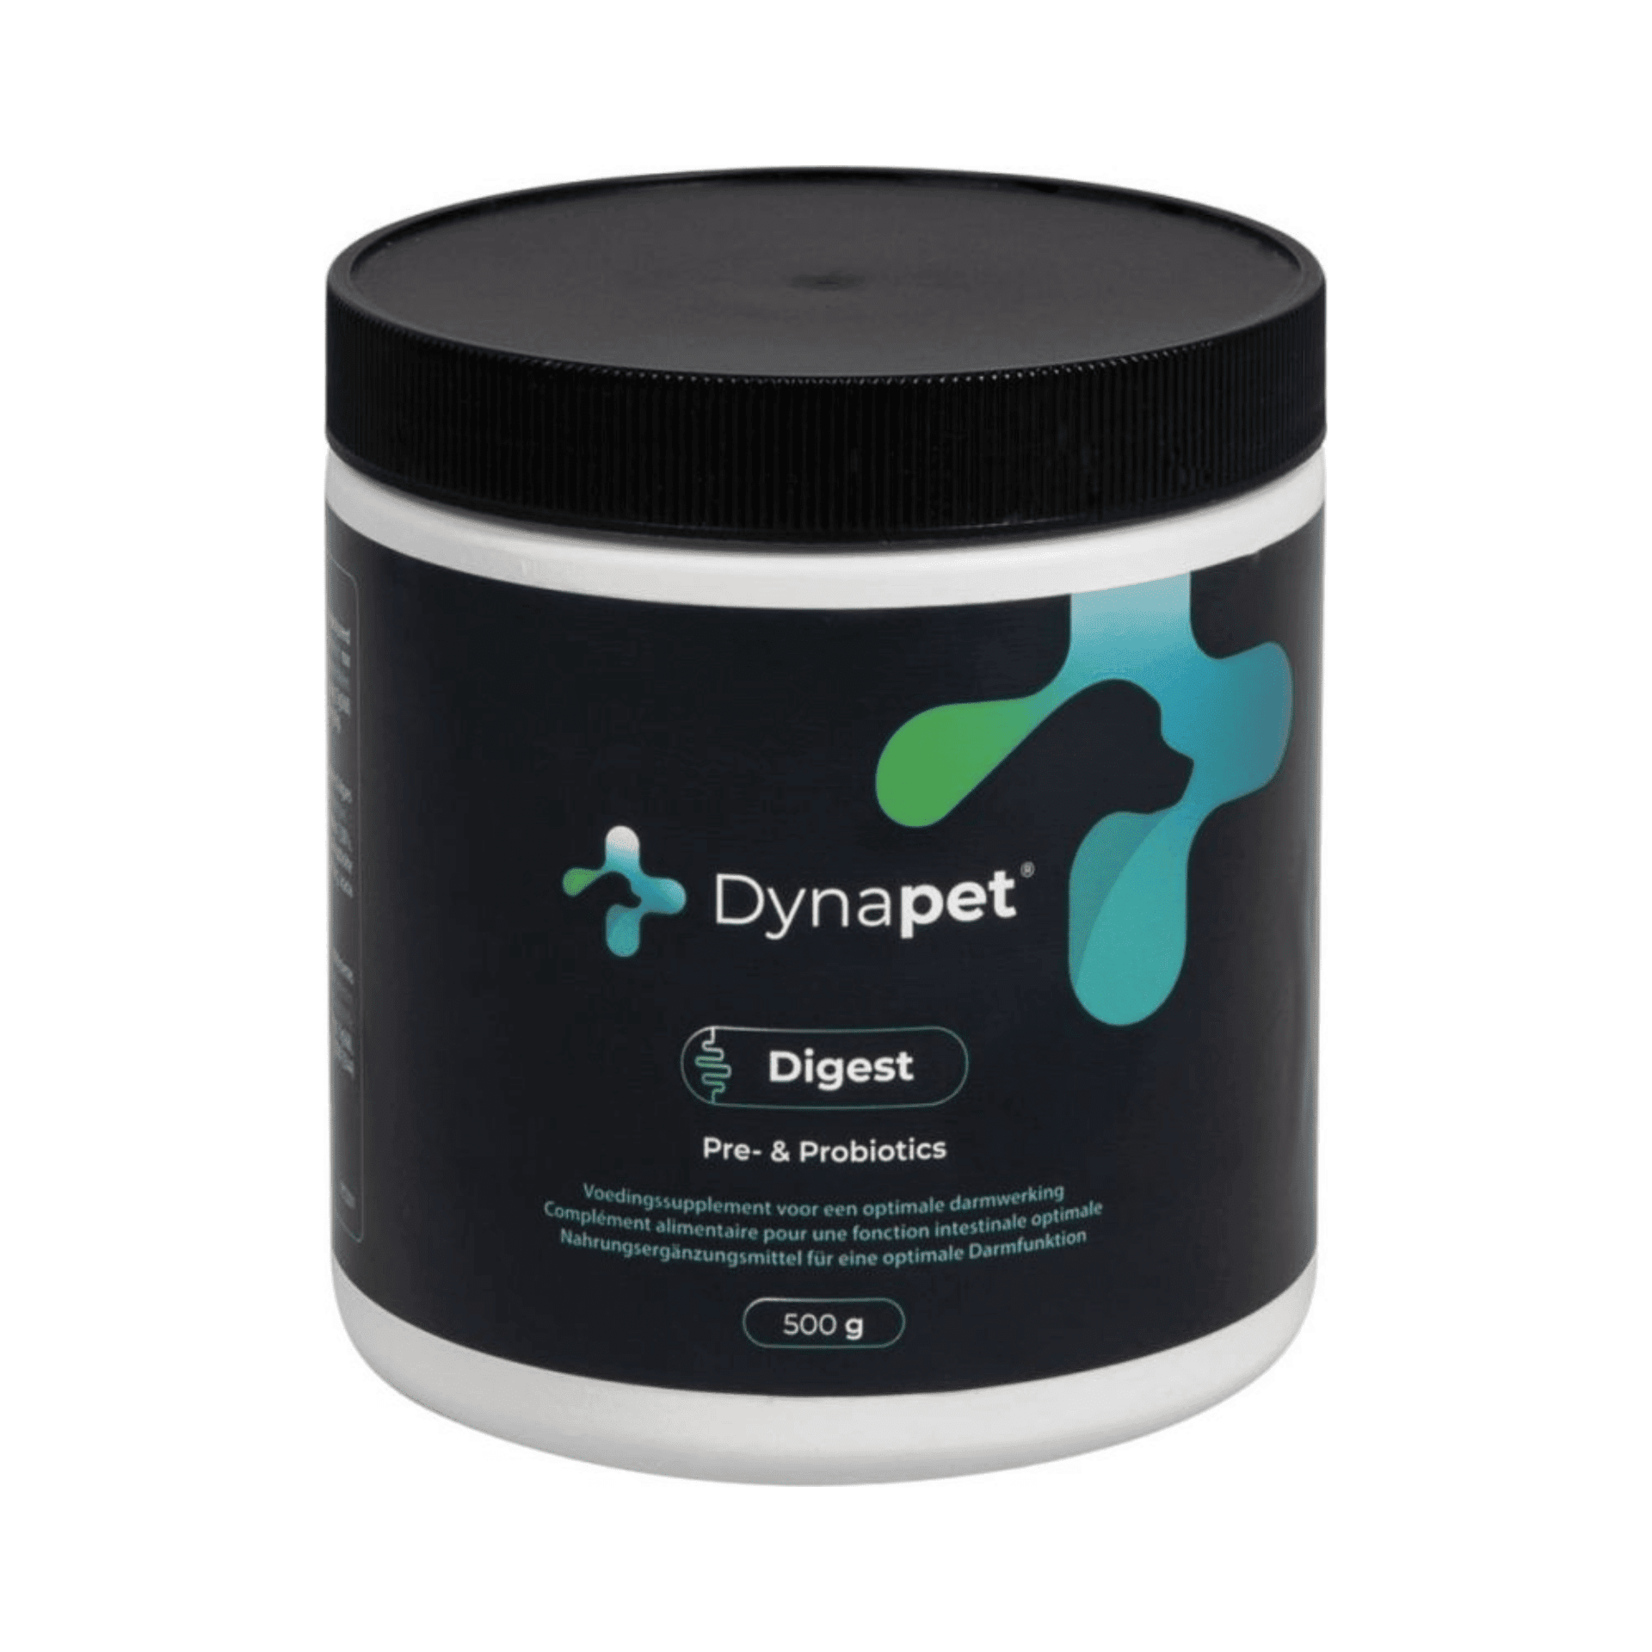 Dynapet Digest